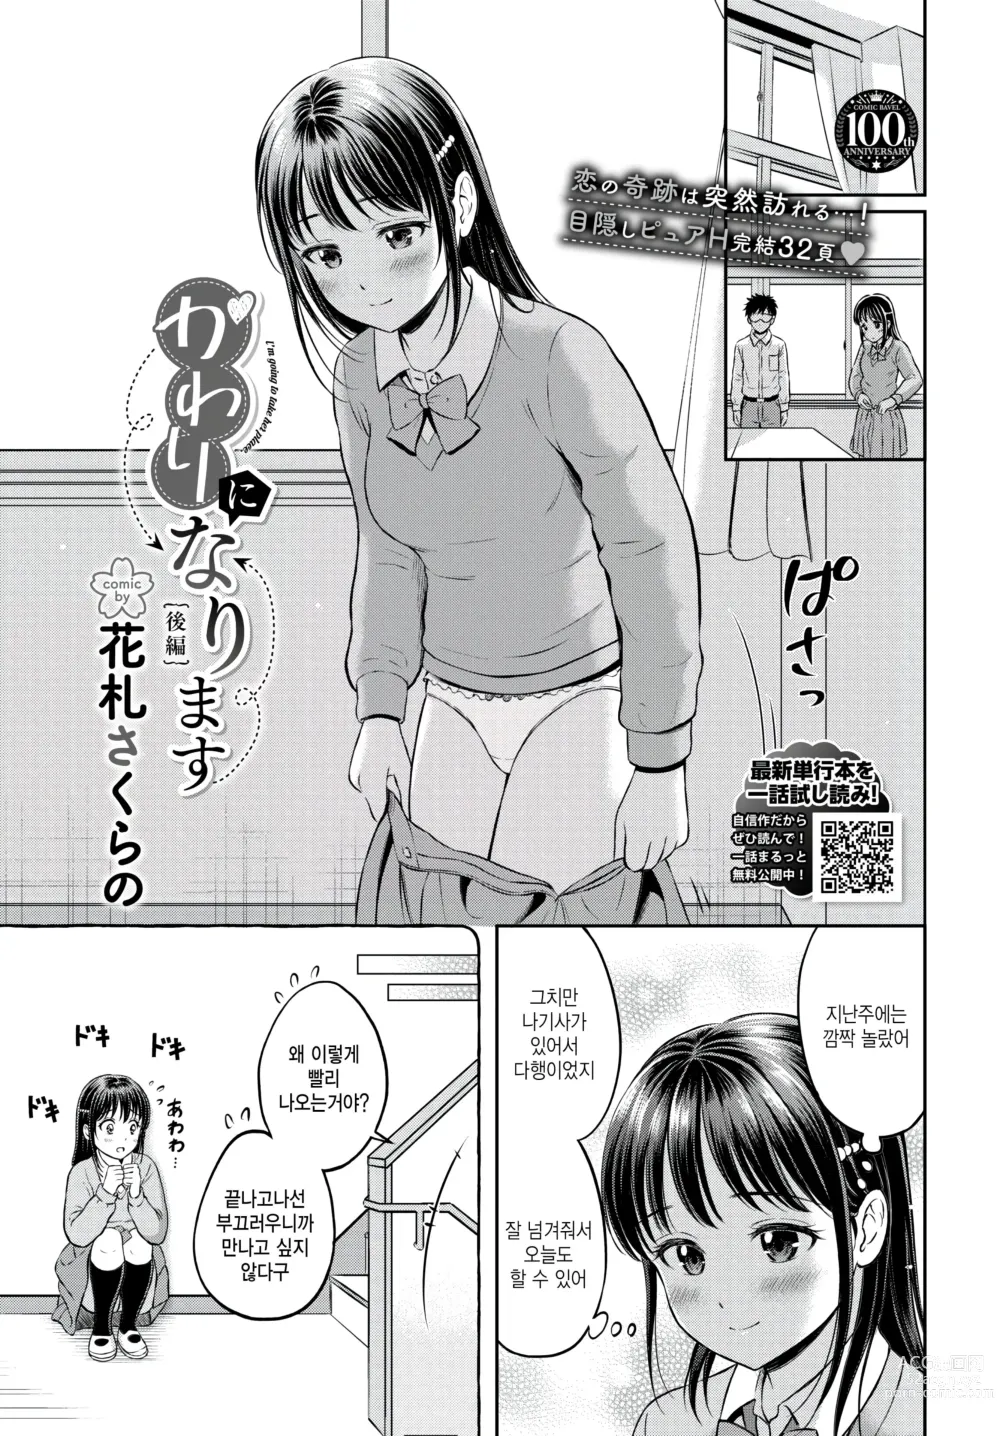 Page 1 of manga Kawari ni Narimasu - Im going to take her place. -Kouhen-